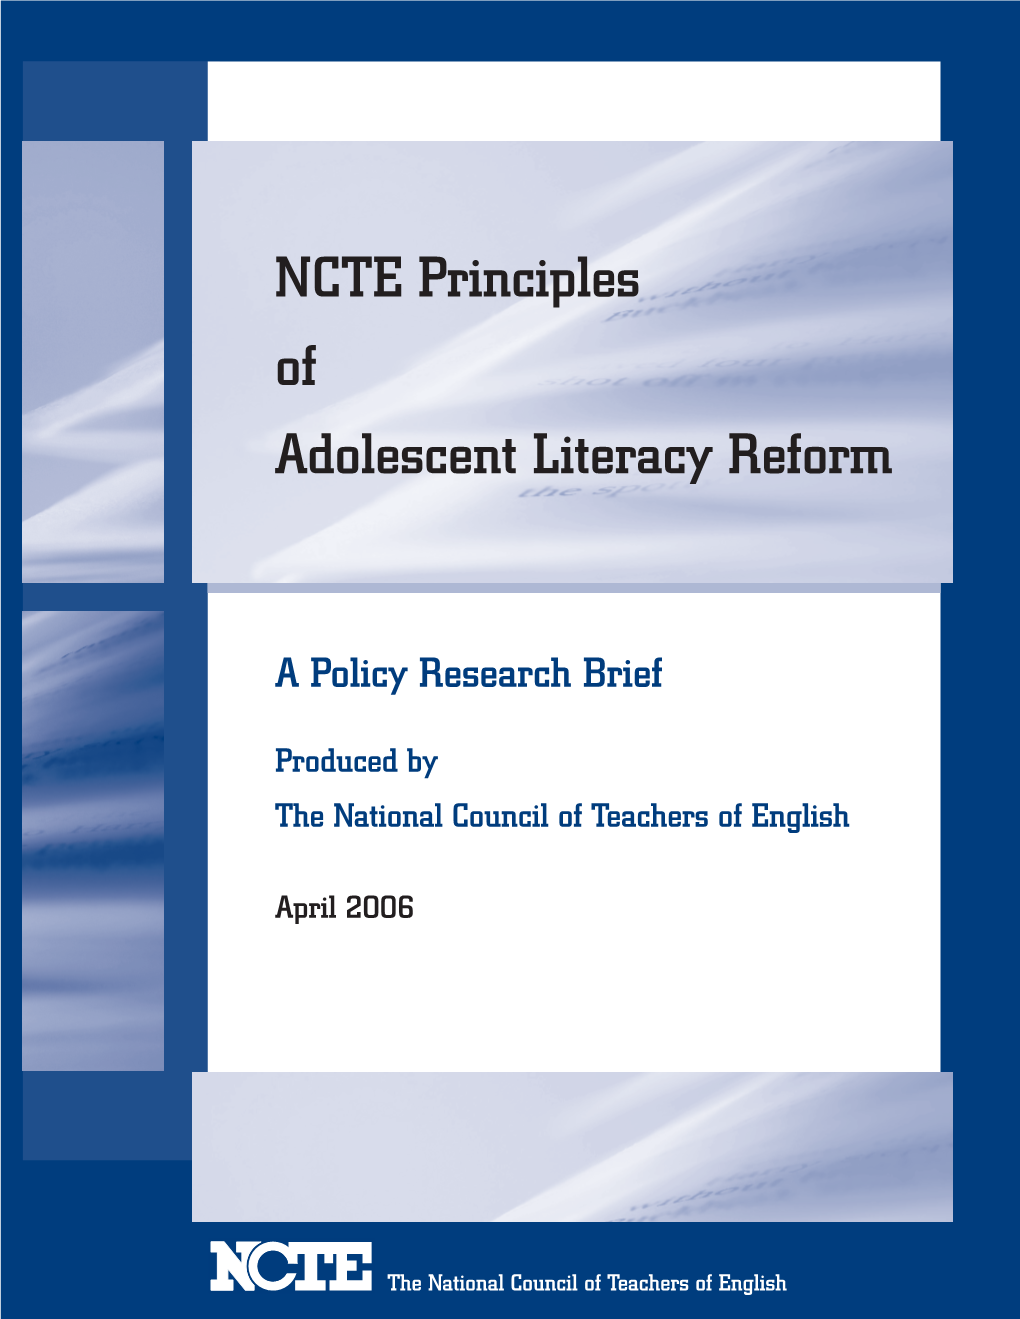 NCTE Principles of Adolescent Literacy Reform